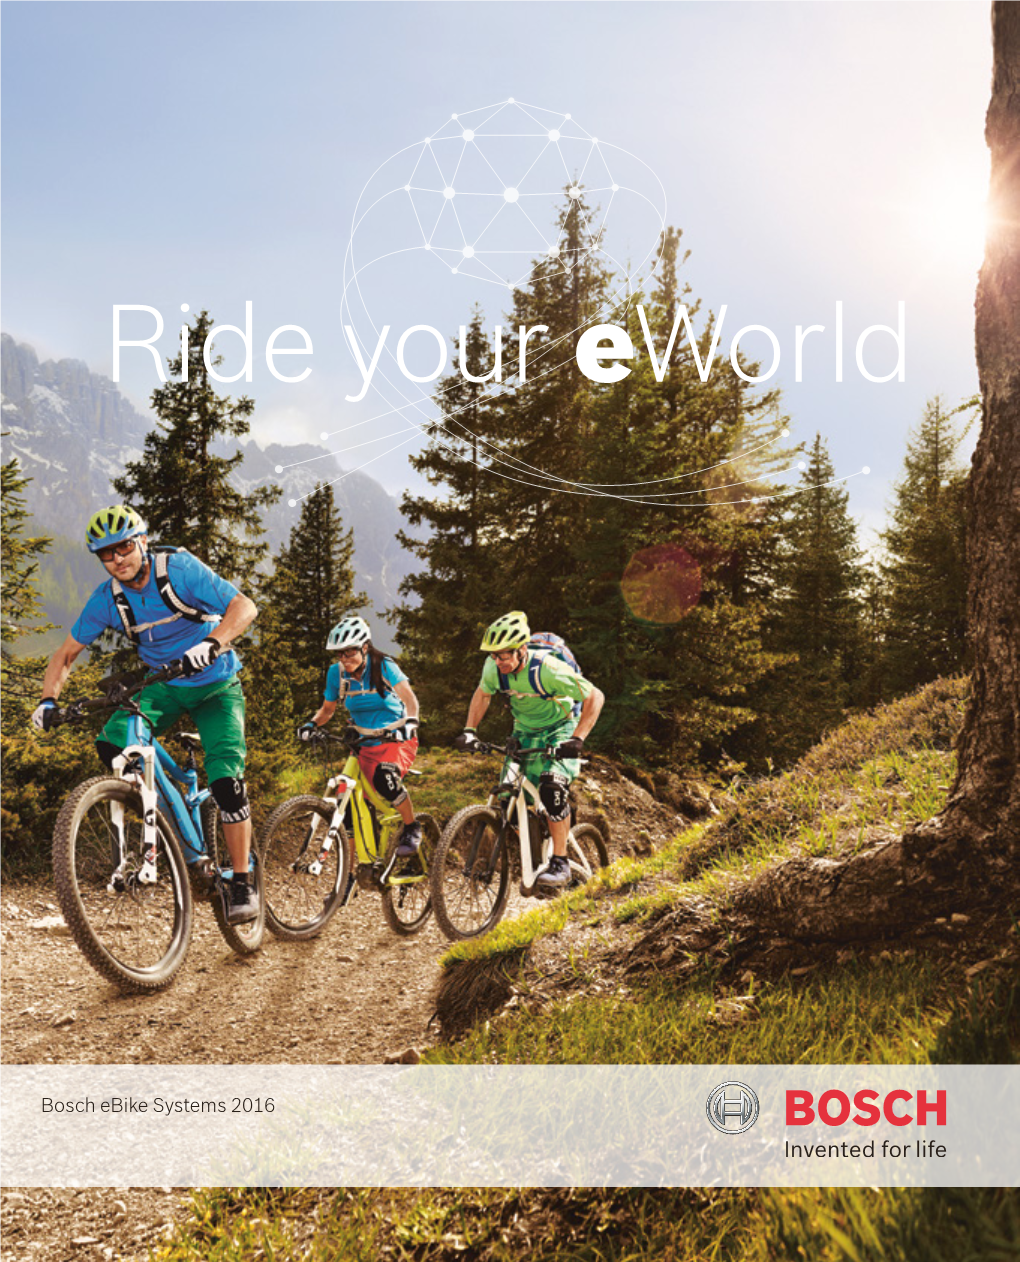 Bosch Ebike Systems 2016 Ride Your Eworld Bosch Ebike Systems 3